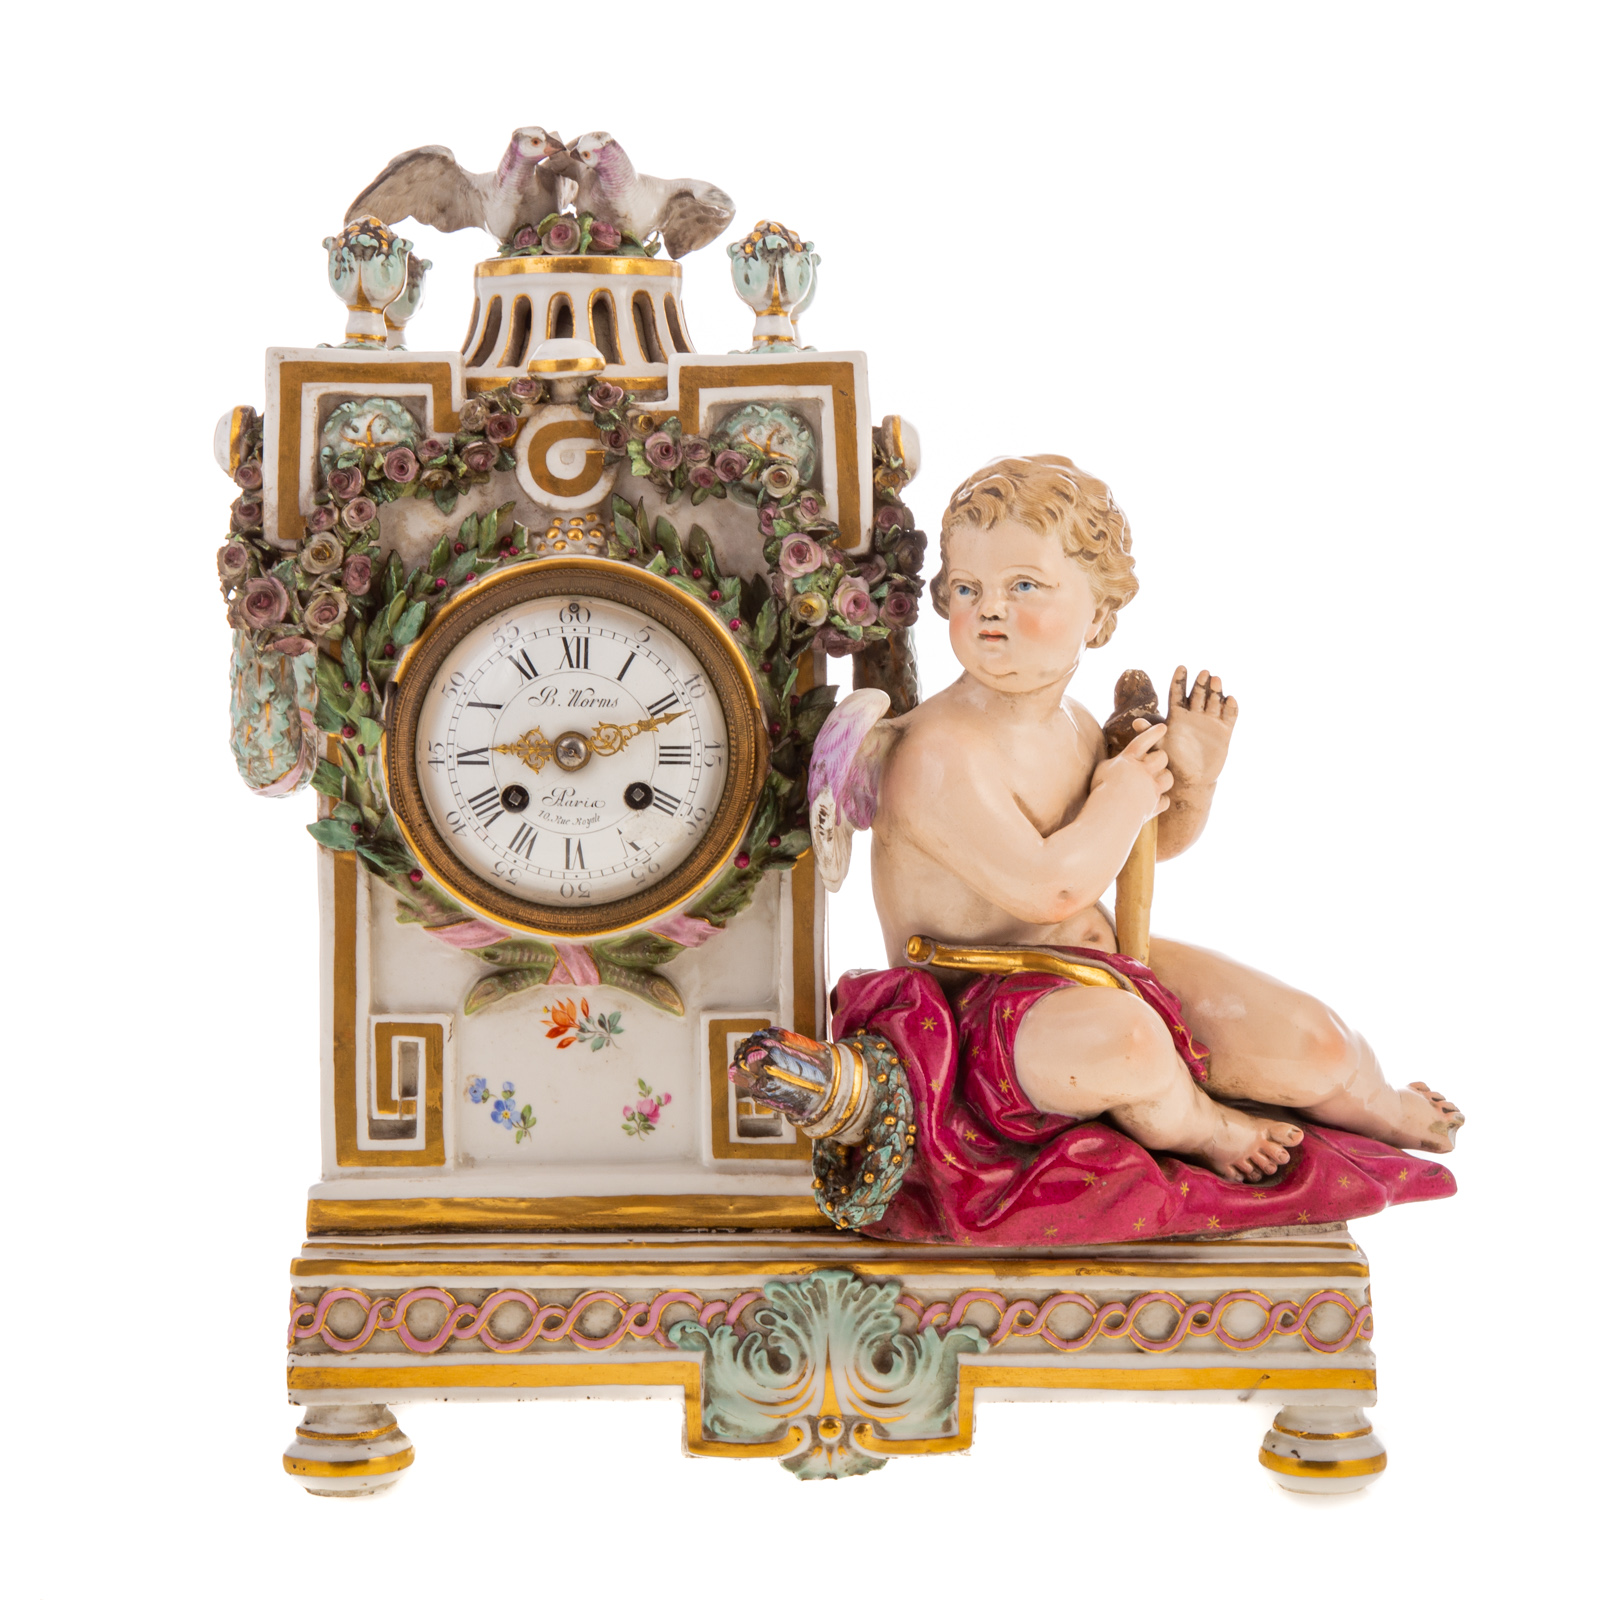 MEISSEN PORCELAIN CLOCK 19th century;